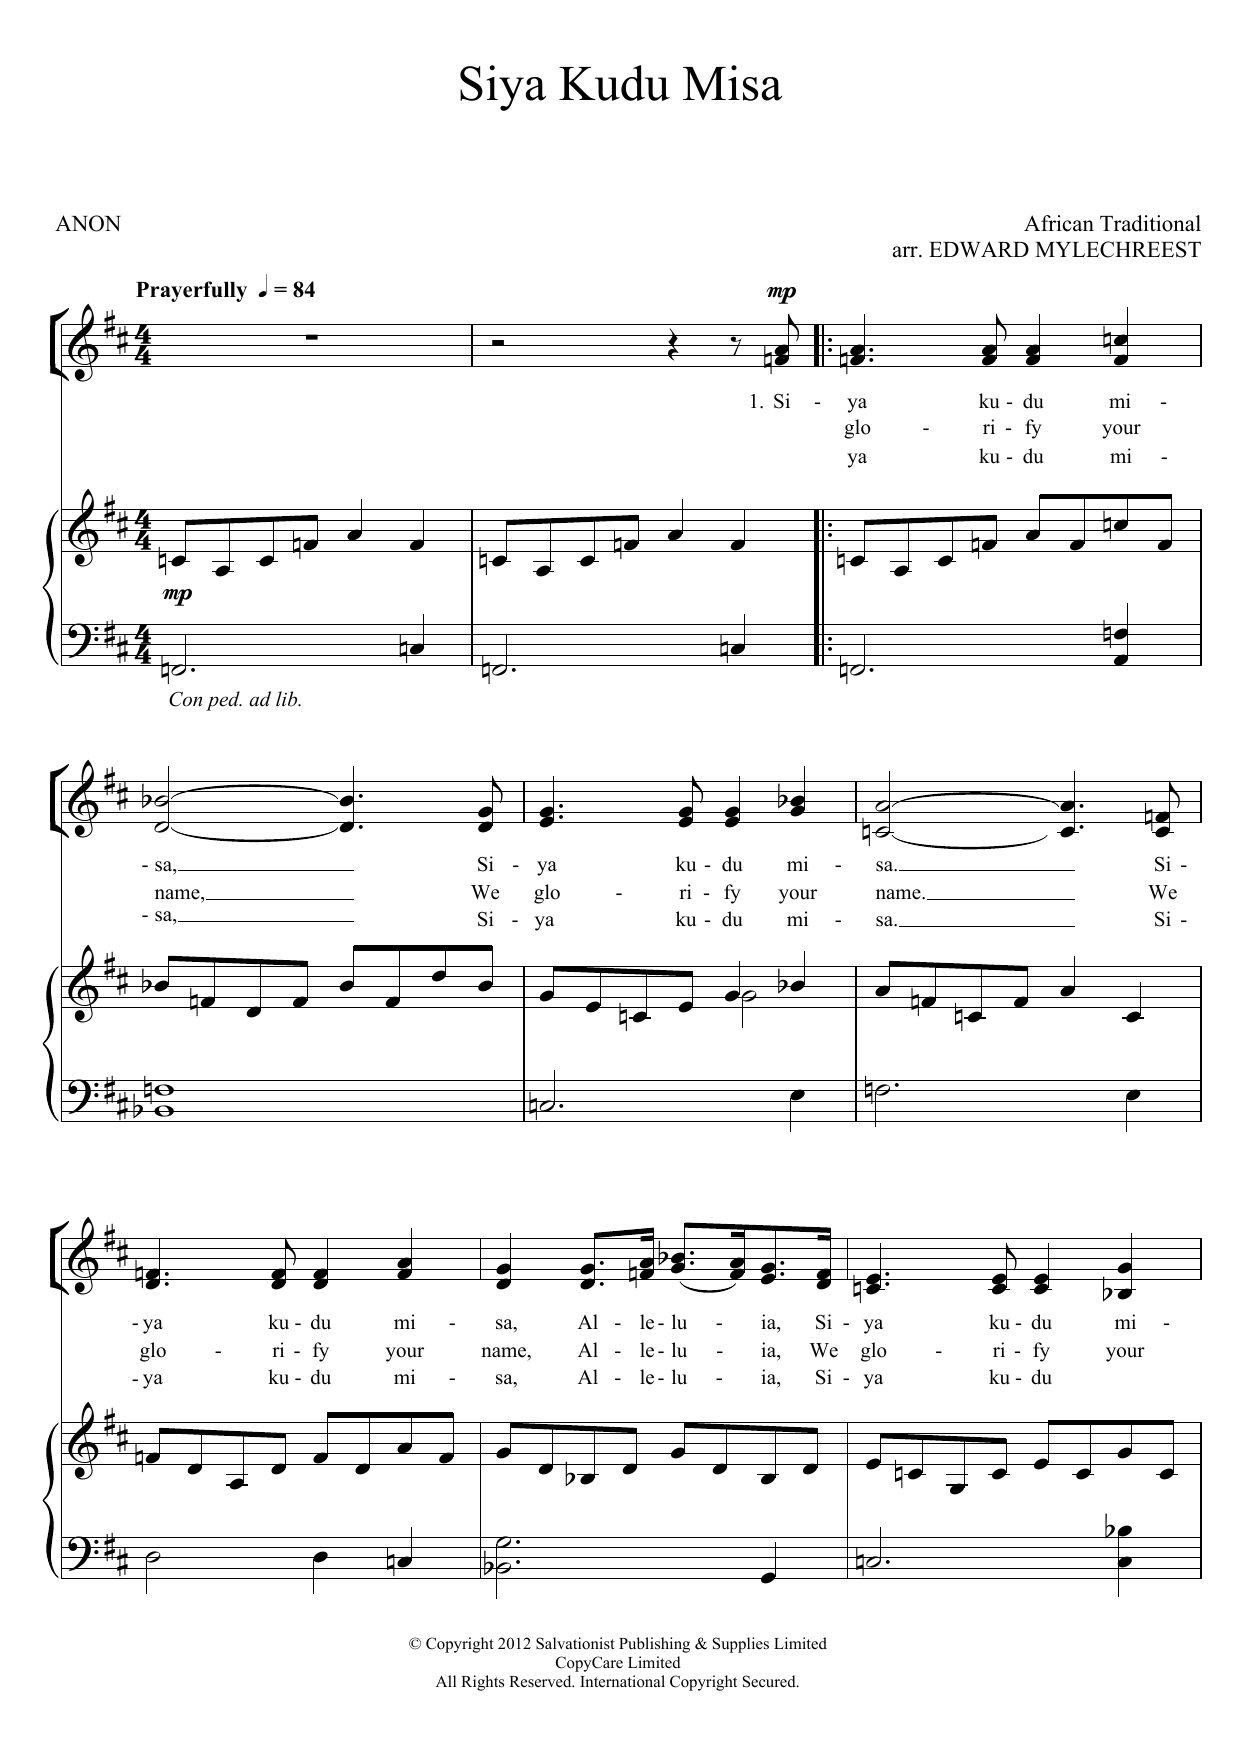 The Salvation Army Siya Kuda Misa Sheet Music Notes & Chords for Unison Choral - Download or Print PDF